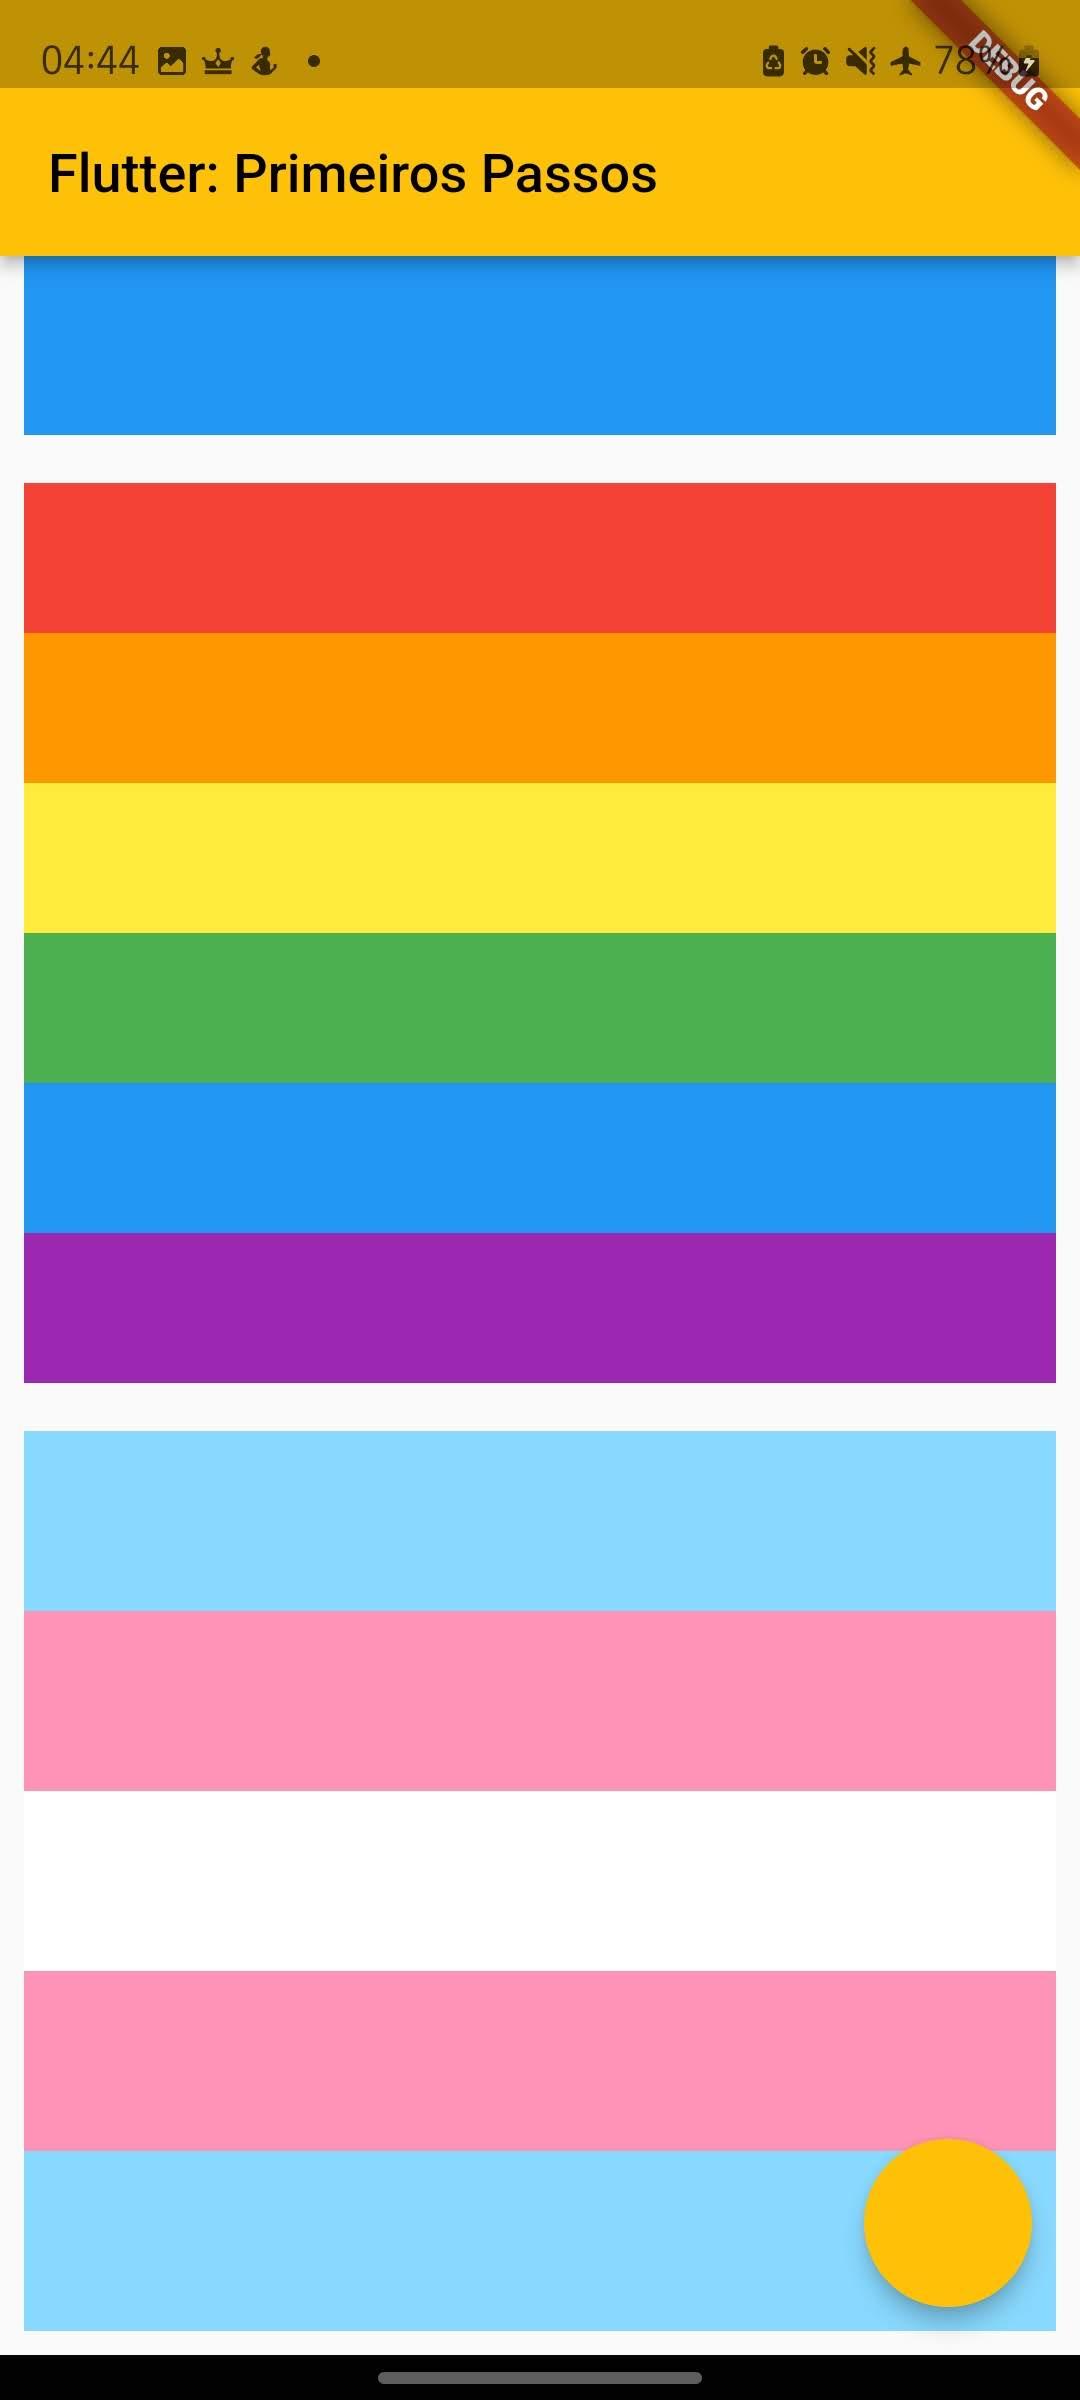 Printscreen da tela com a bandeira da comunidade LGBT e outra da bandeira trans